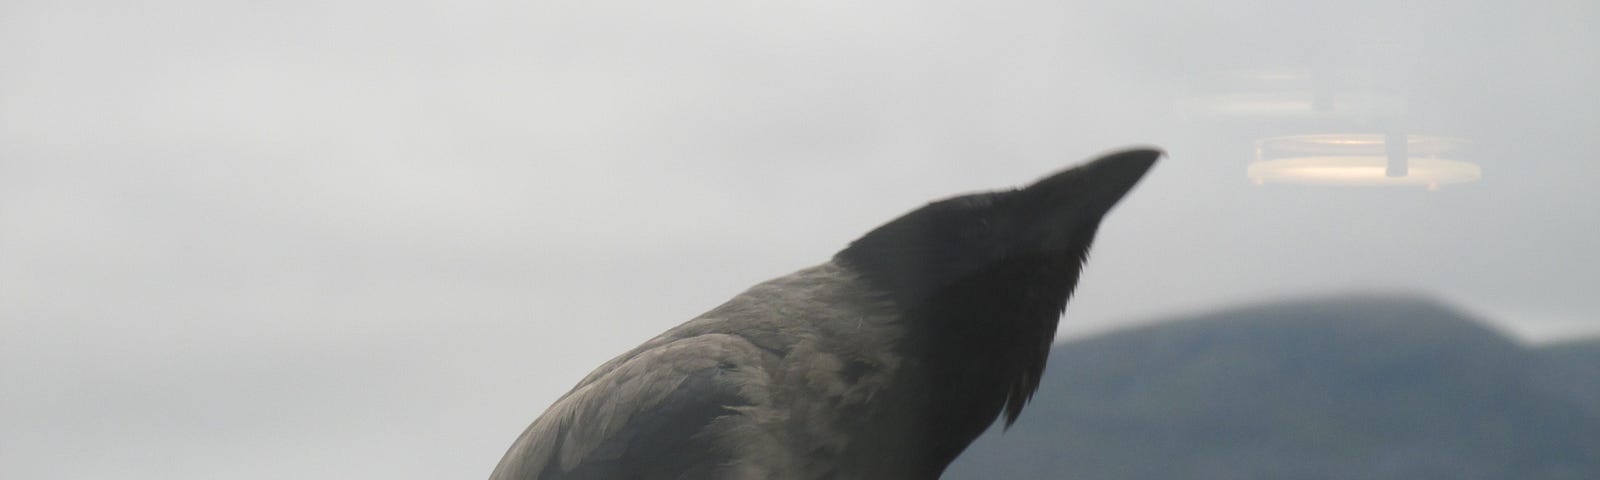 A large crow or raven stares skyward in a bleak background — harbinger of impending doom.